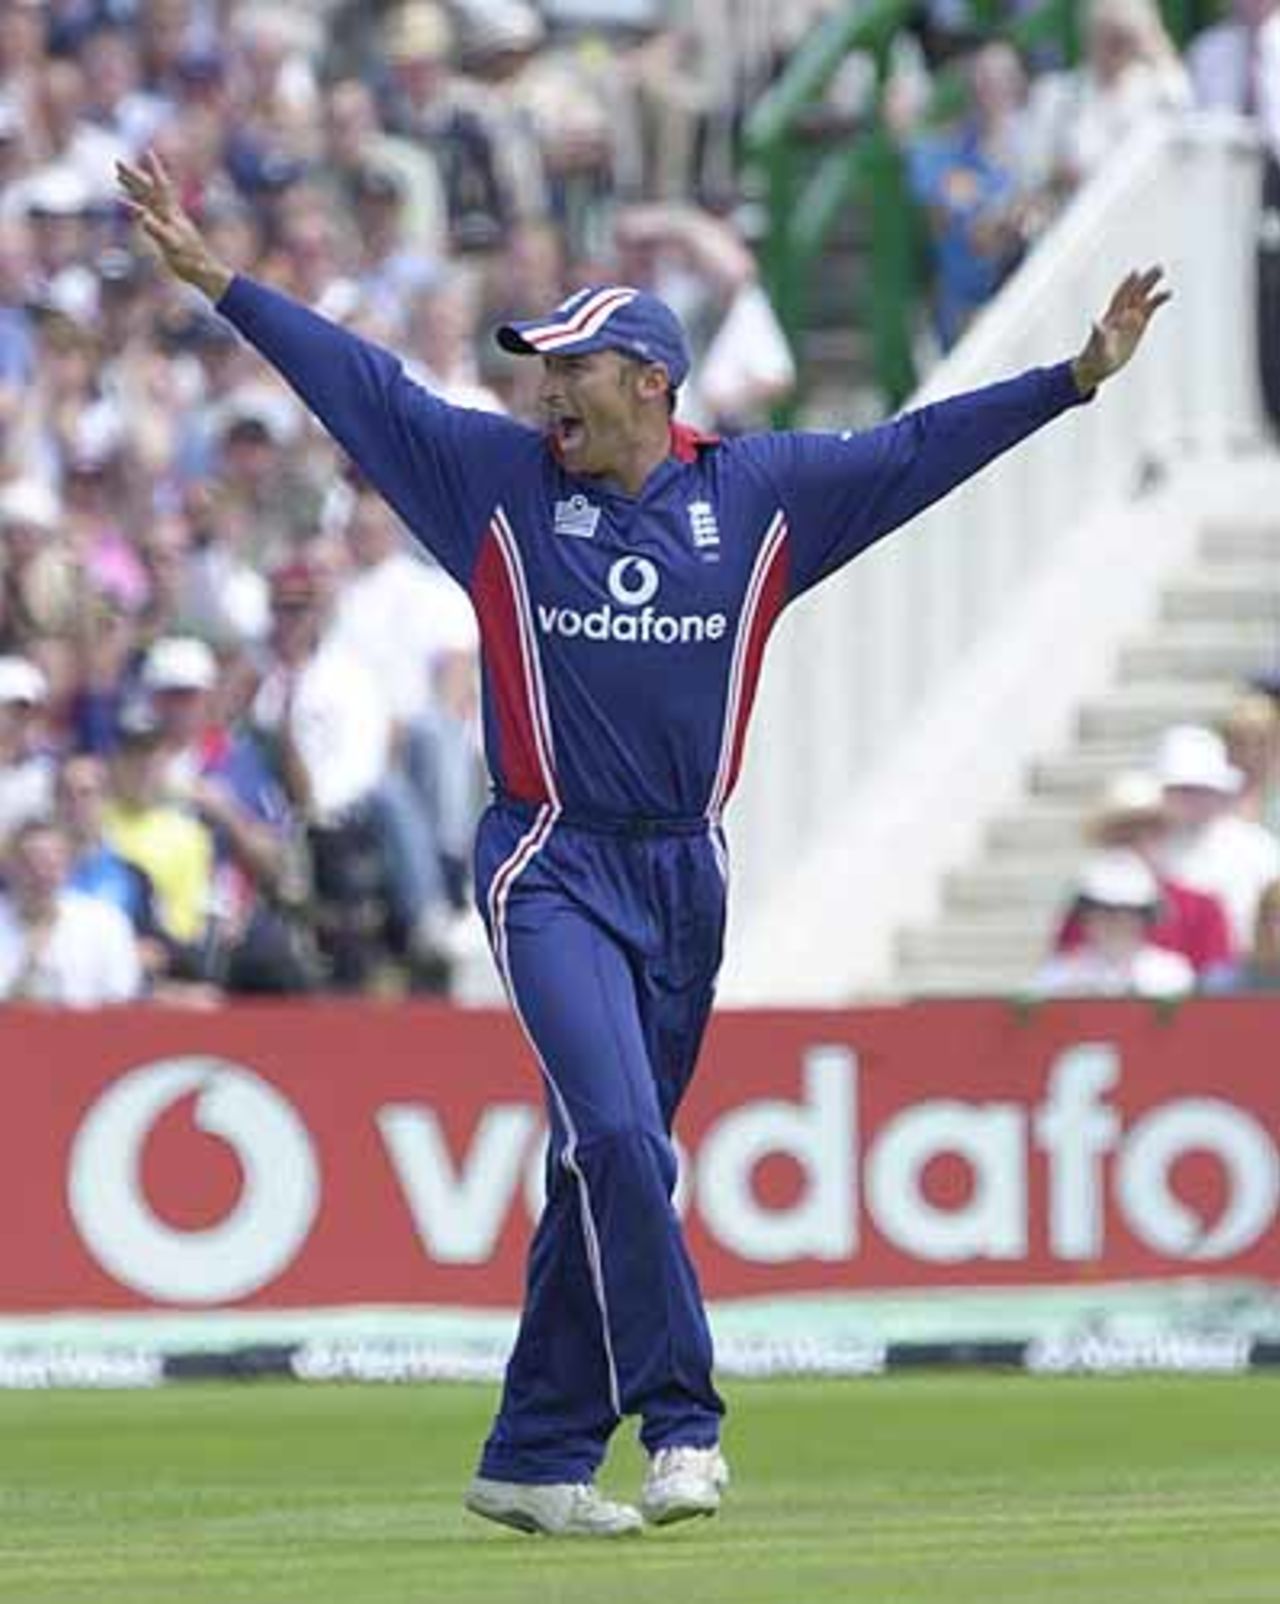 Nasser Hussain proclaims the run out of Jayawardene after some excellent Tudor fielding, England v Sri Lanka at Manchester, July 2002